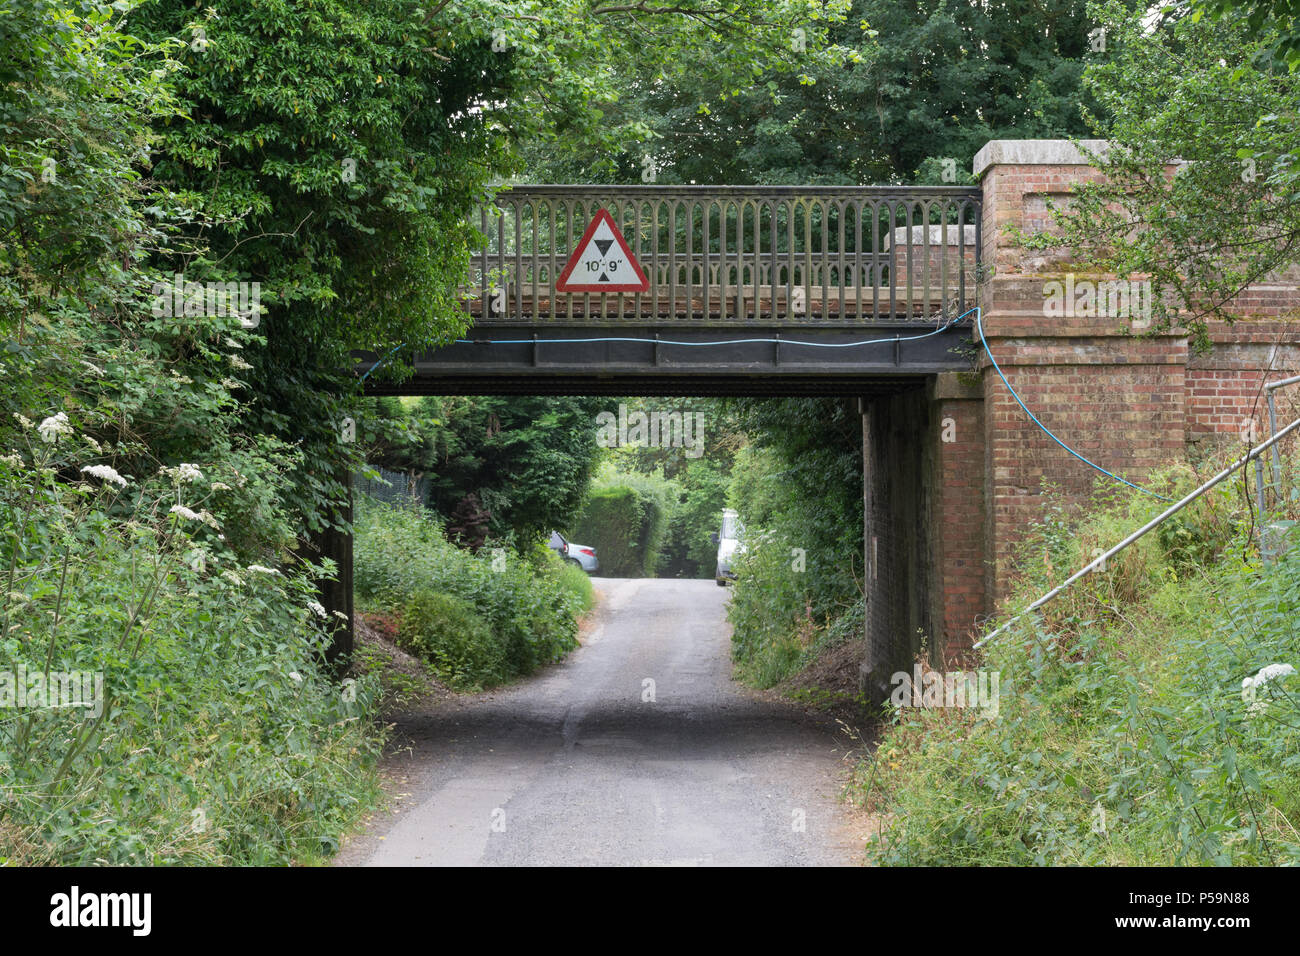 Low bridge sign in Surrey, UK Stock Photo